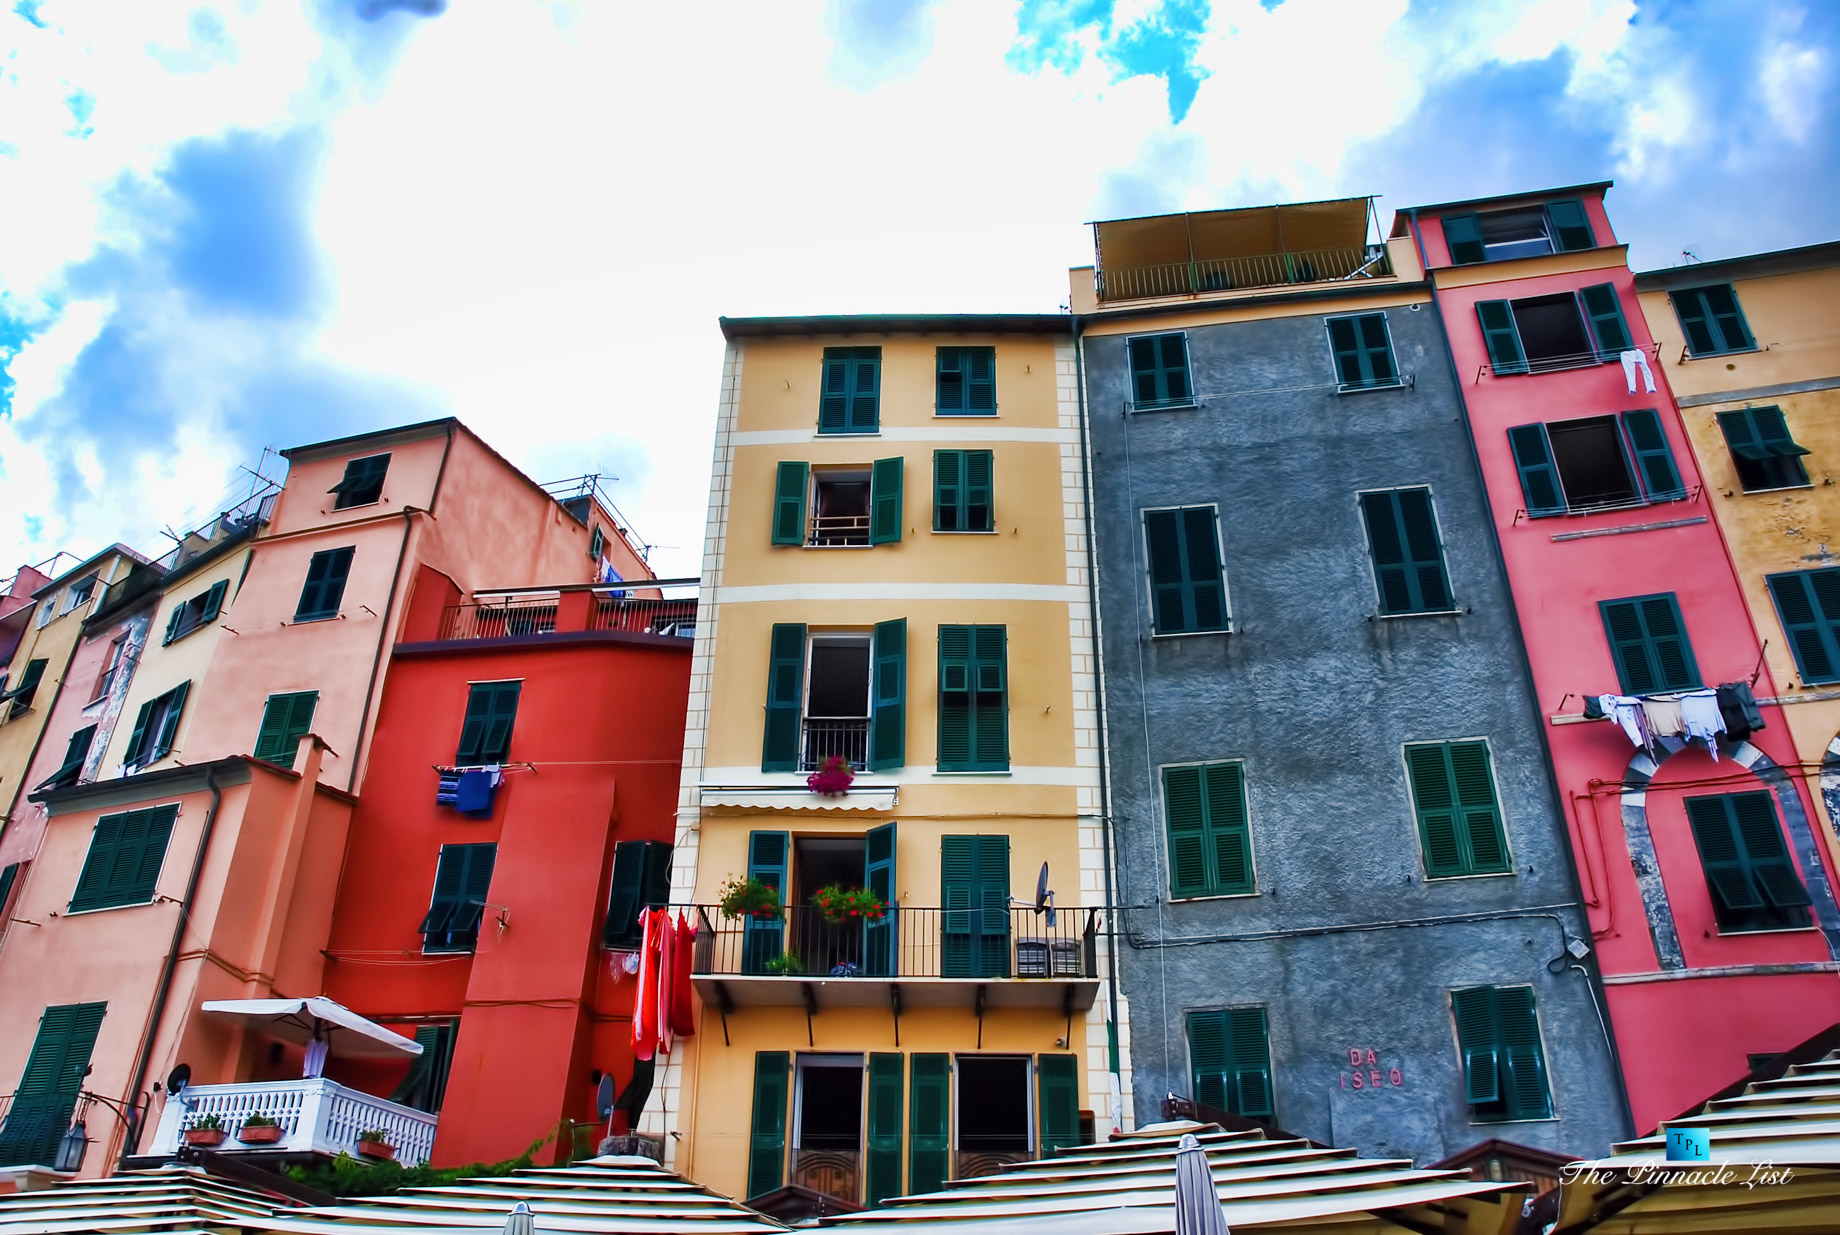 Portovenere, La Spezia, Liguria - Italy's Hidden Treasure